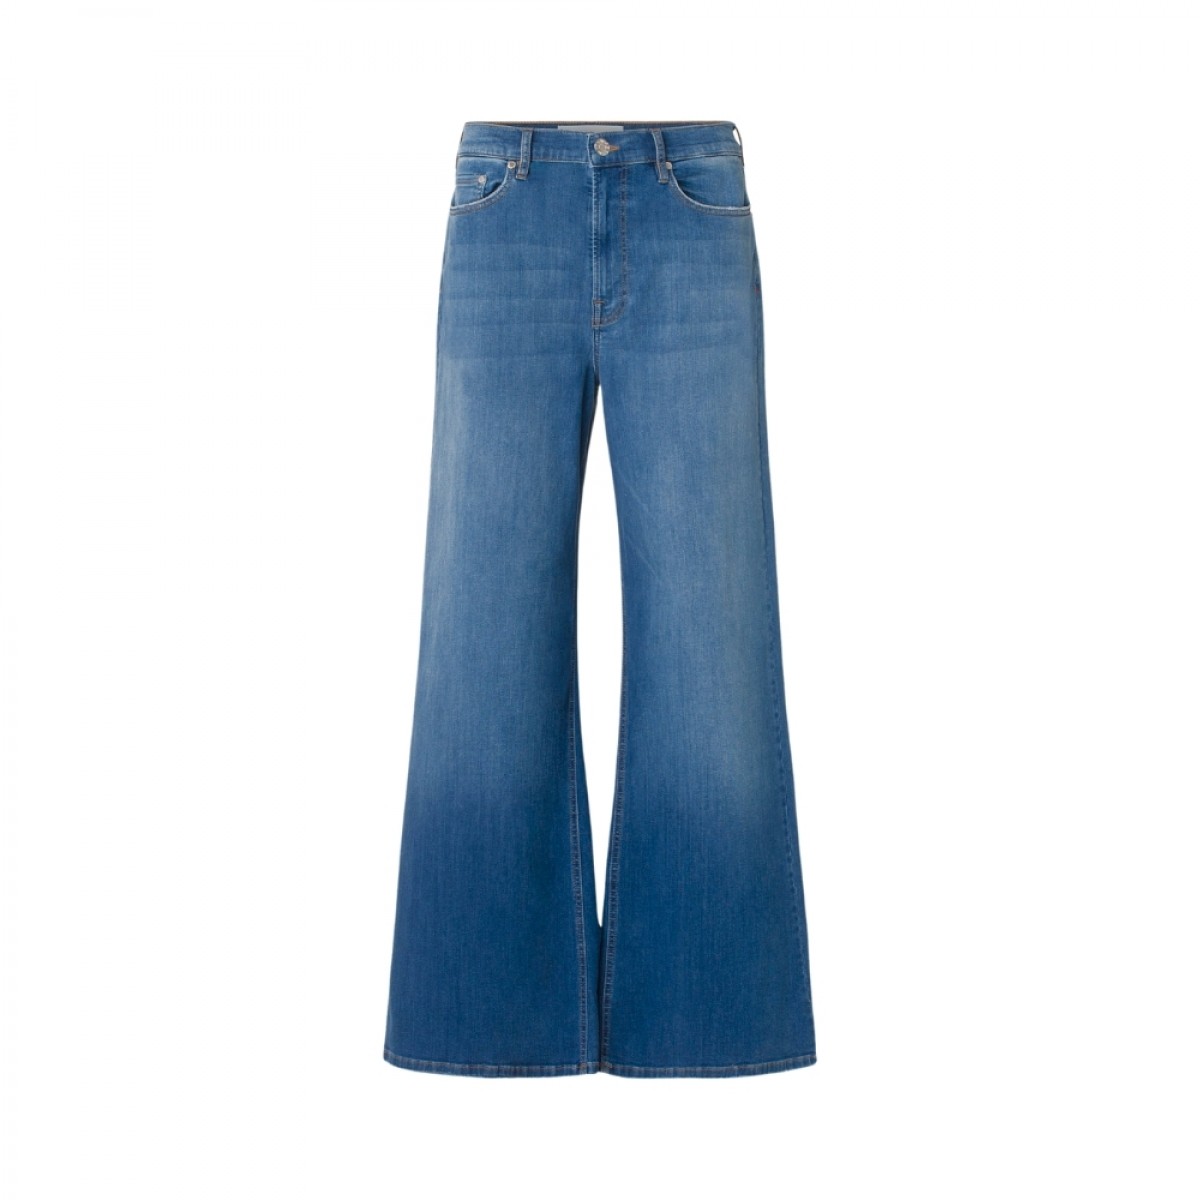 trw arizona jeans wash dark florence - denim blue - front